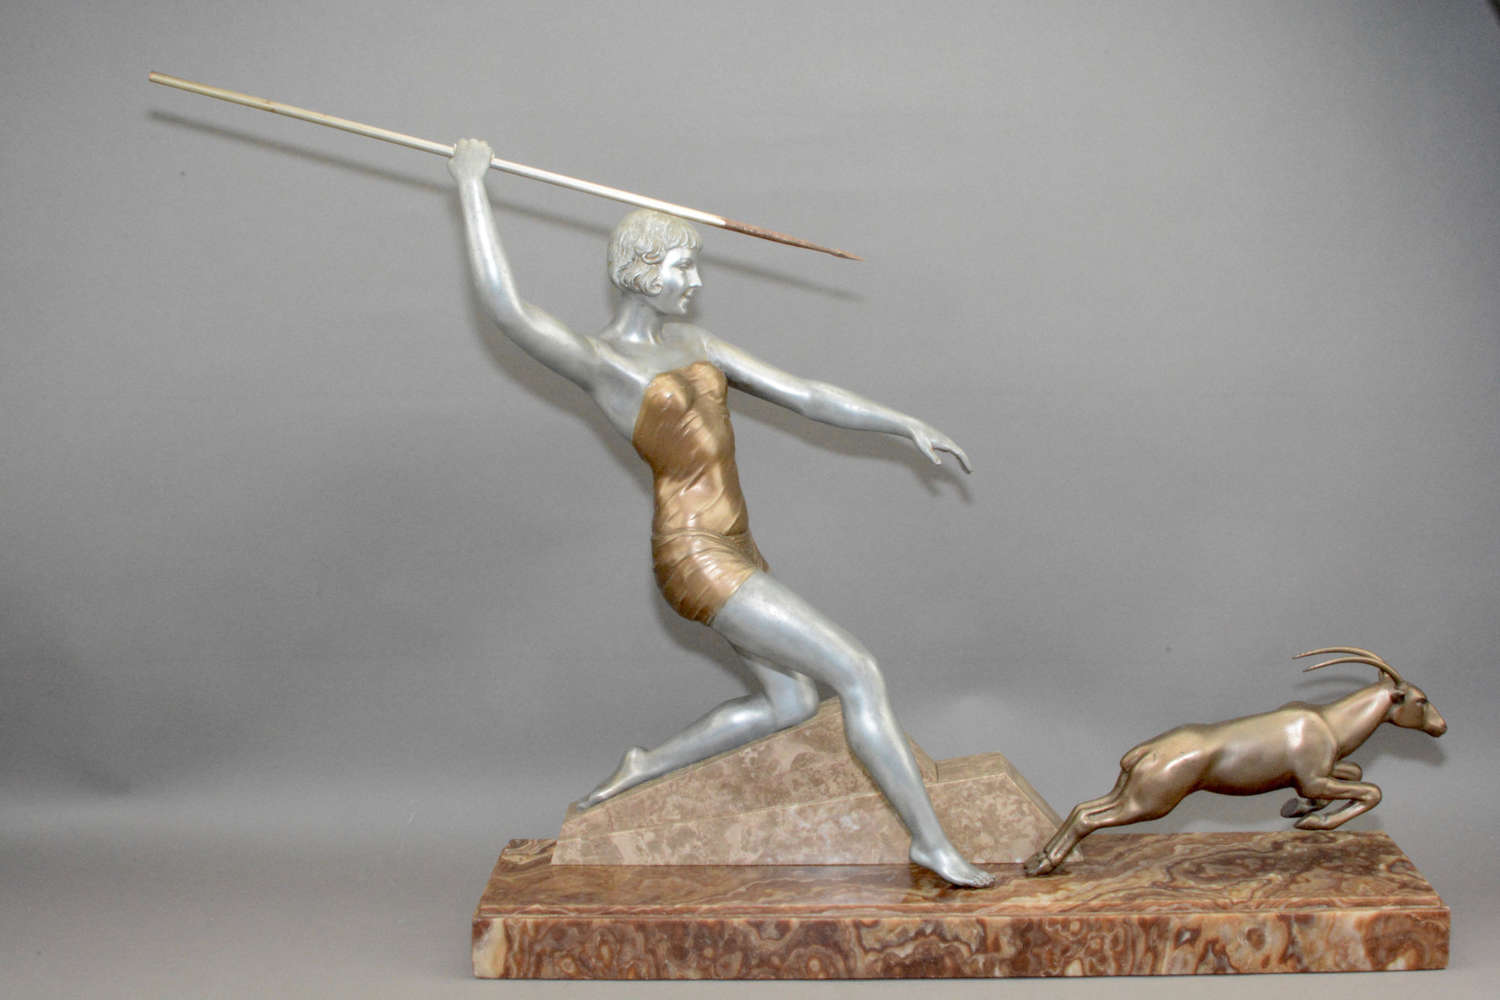 A large impressive Art Deco figure showing Diana the huntress